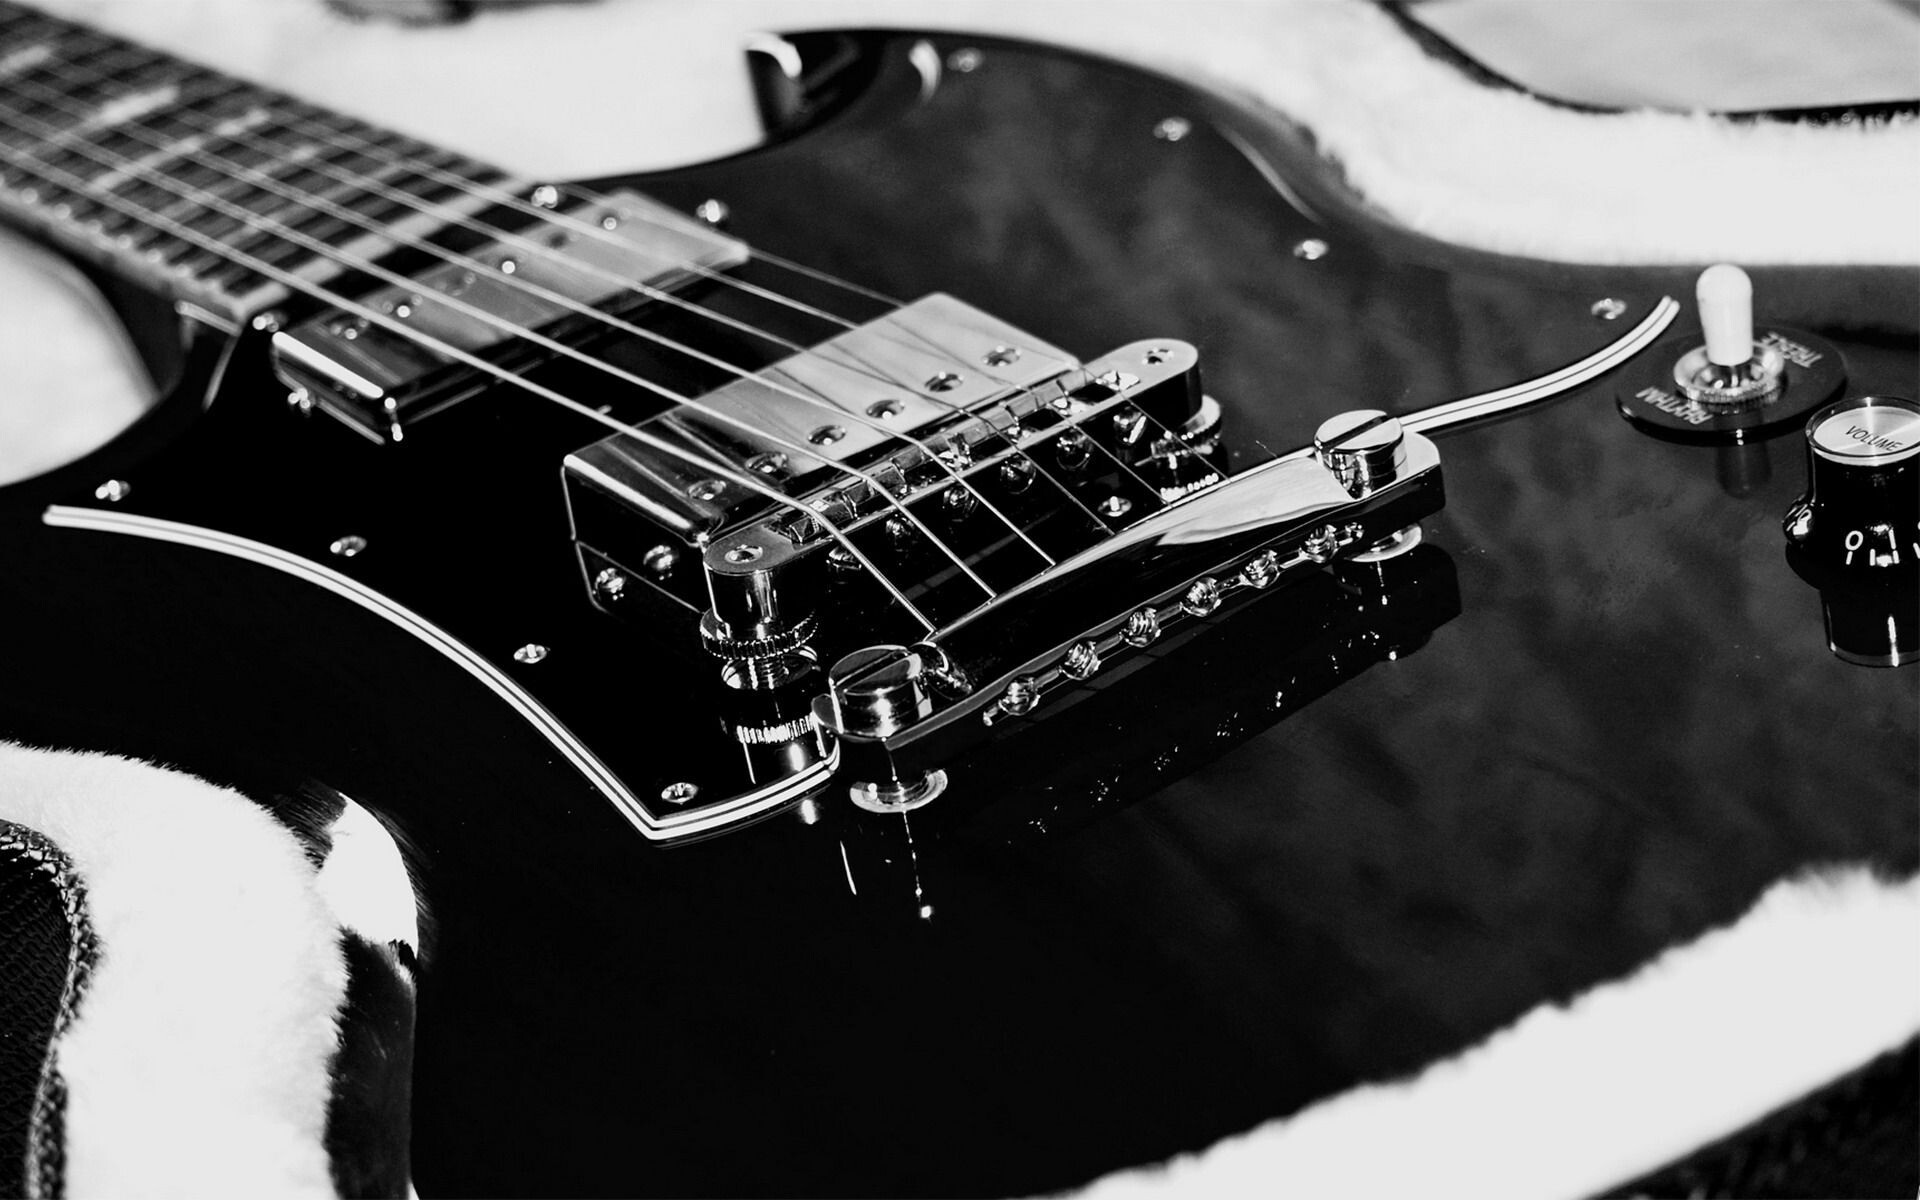 Gibson Guitar: The Joe Perry Boneyard Les Paul, An extremely rare musical instrument. 1920x1200 HD Wallpaper.